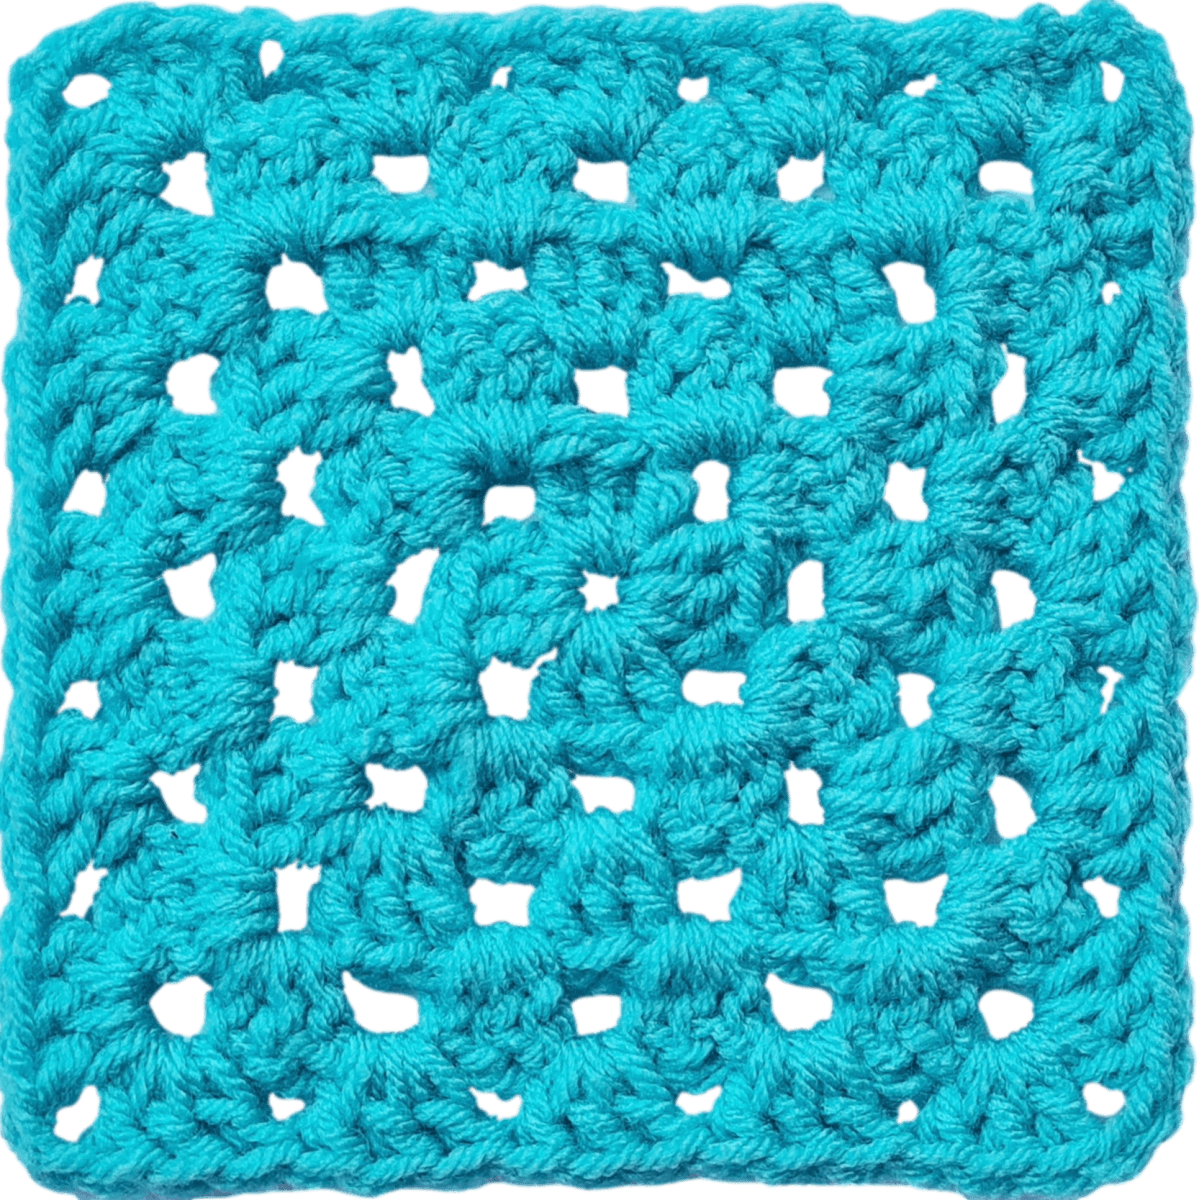 Easy Granny Square - No Seam, No Twist! Easy to Follow Written Crochet Pattern - The Secret Yarnery